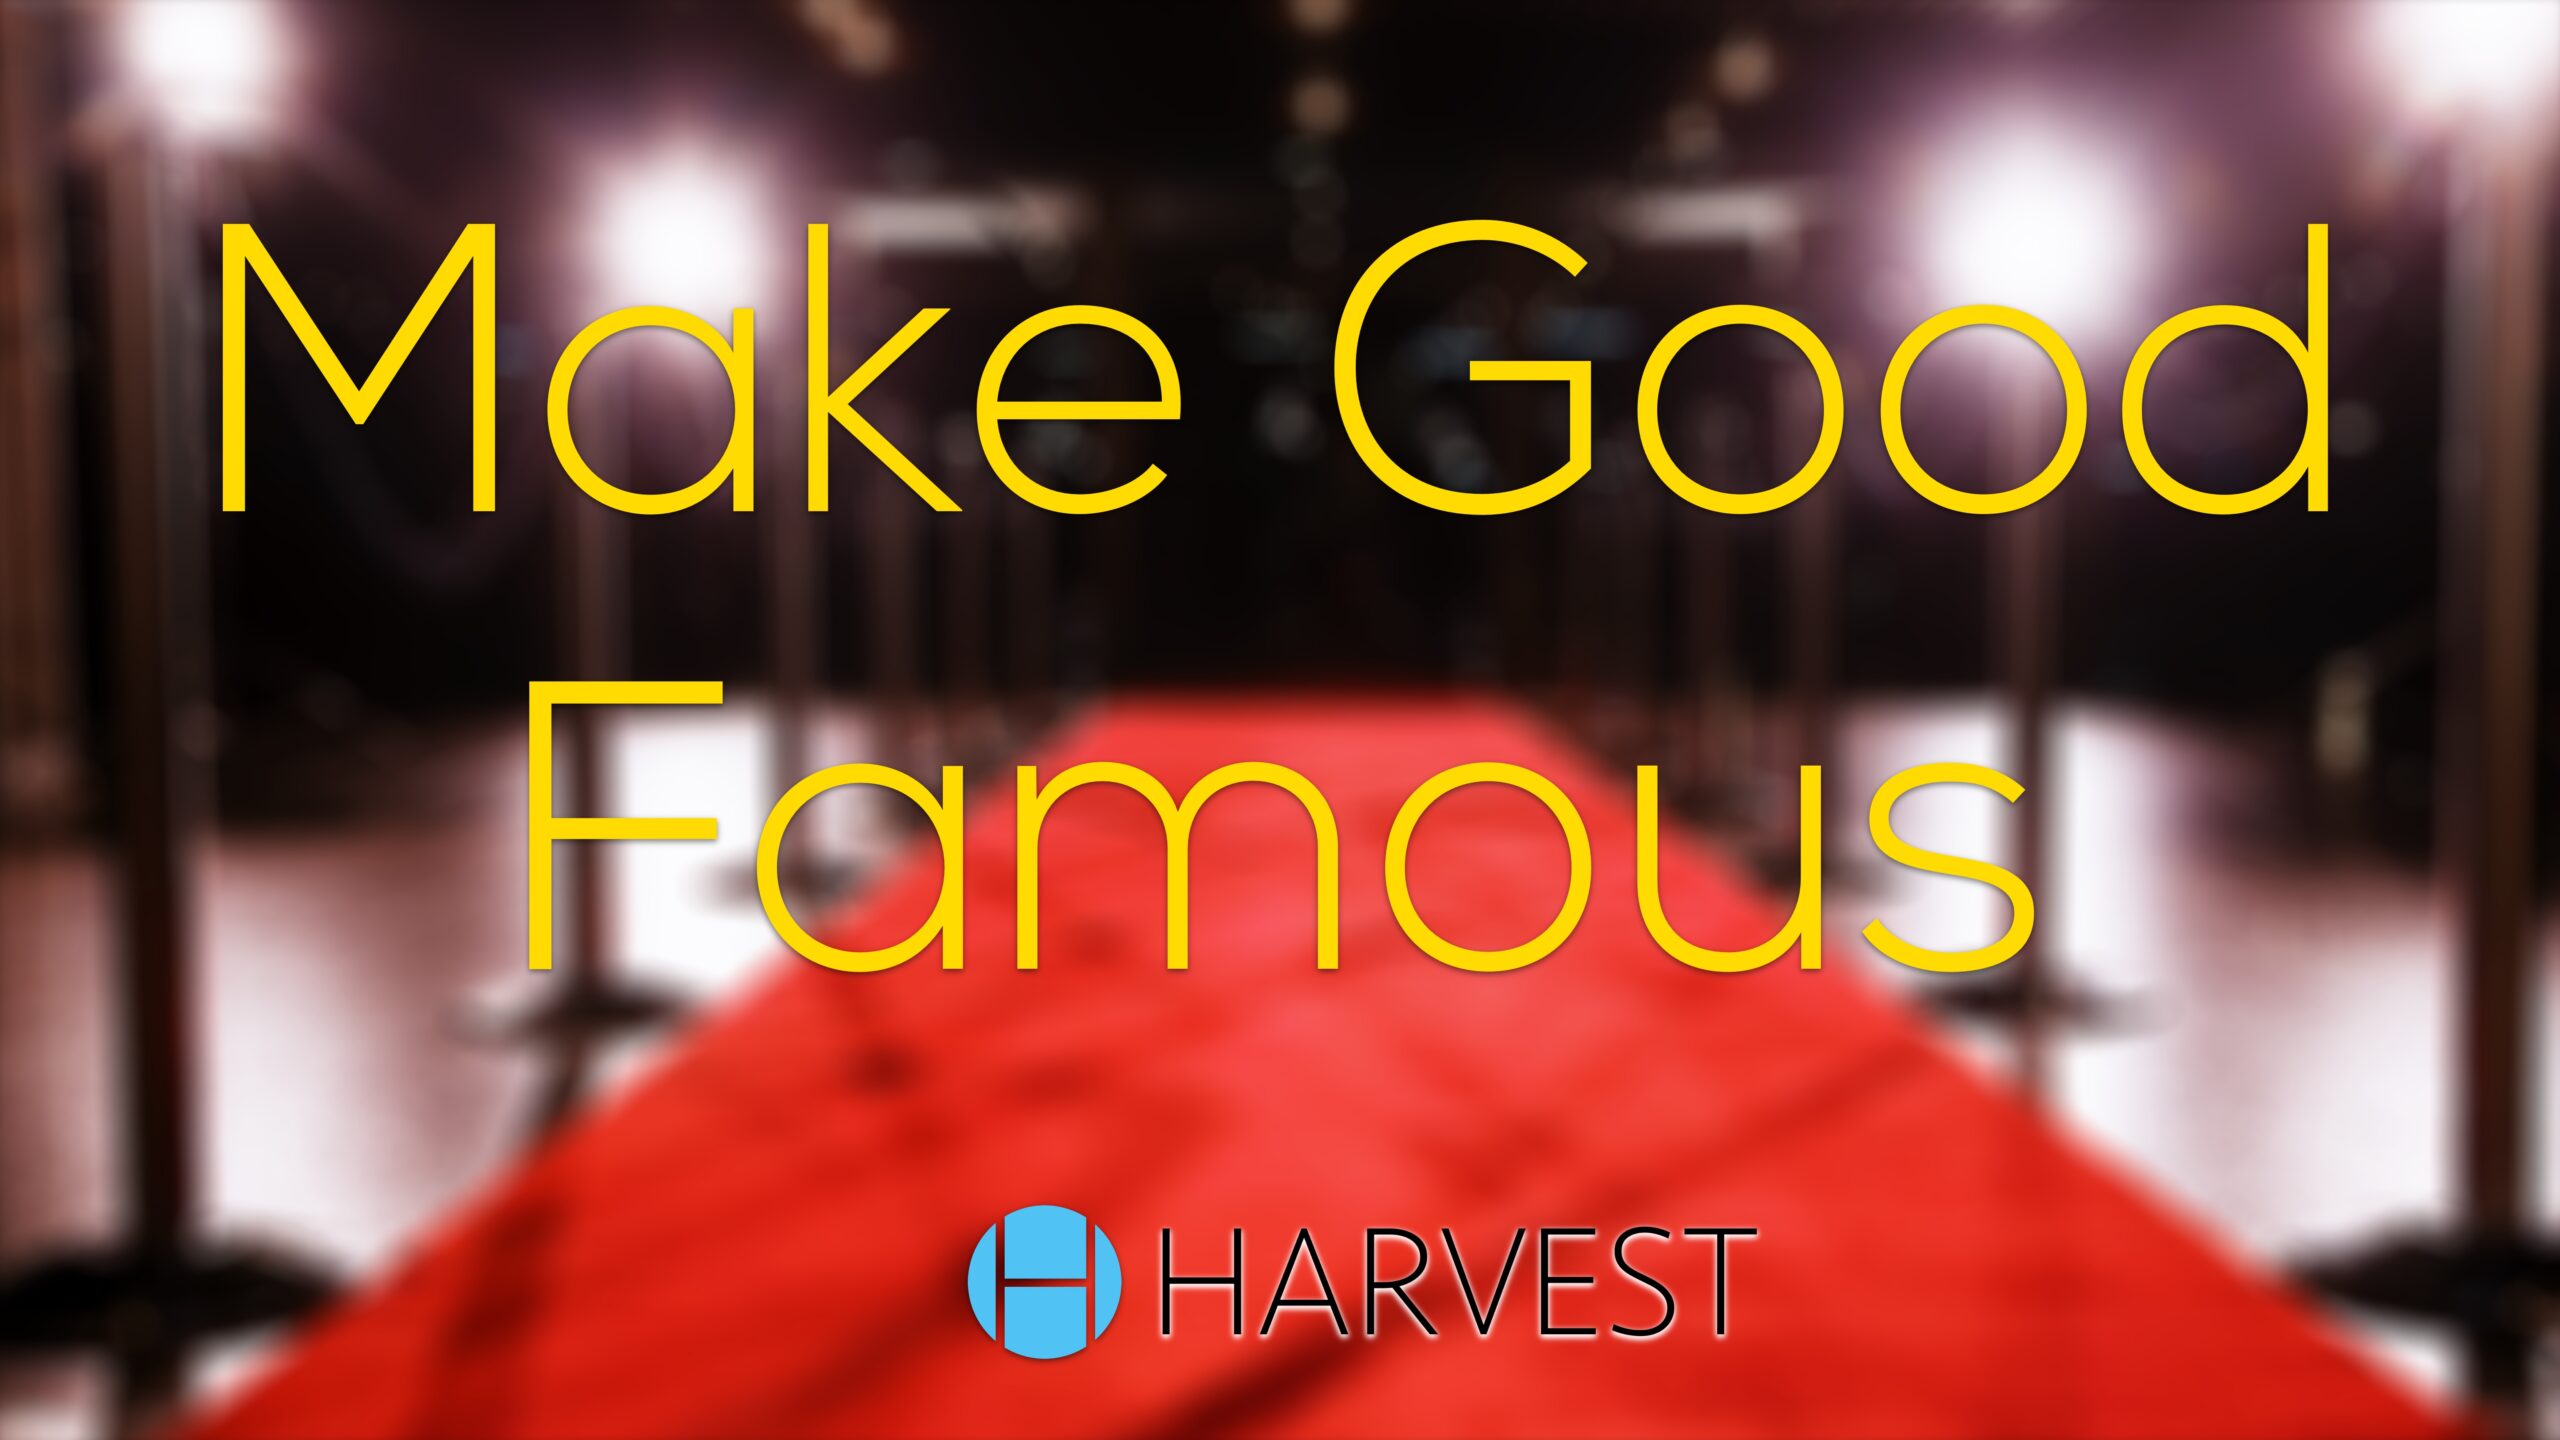 Make Good Famous